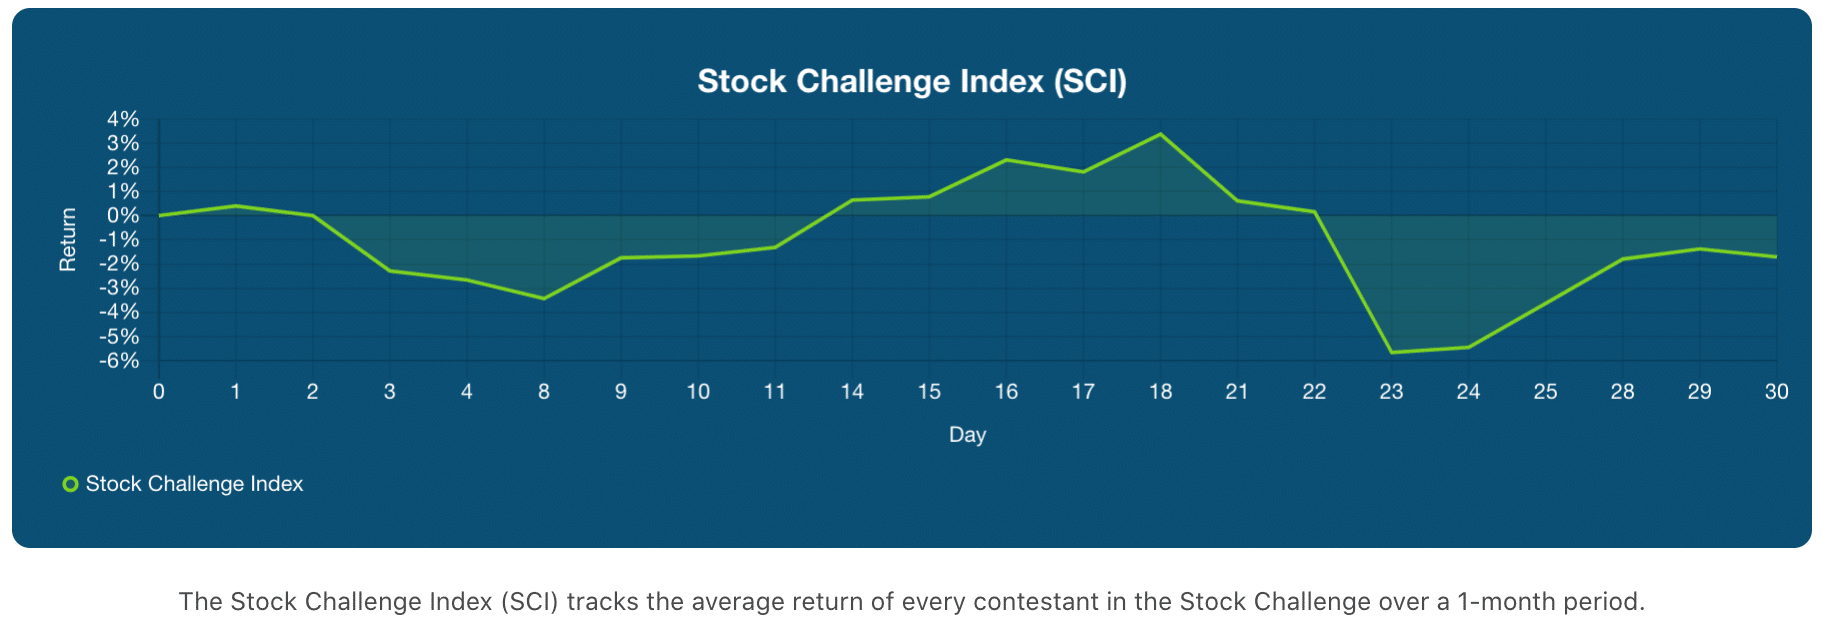 Stock Challenge Index (SCI) for September 30, 2020